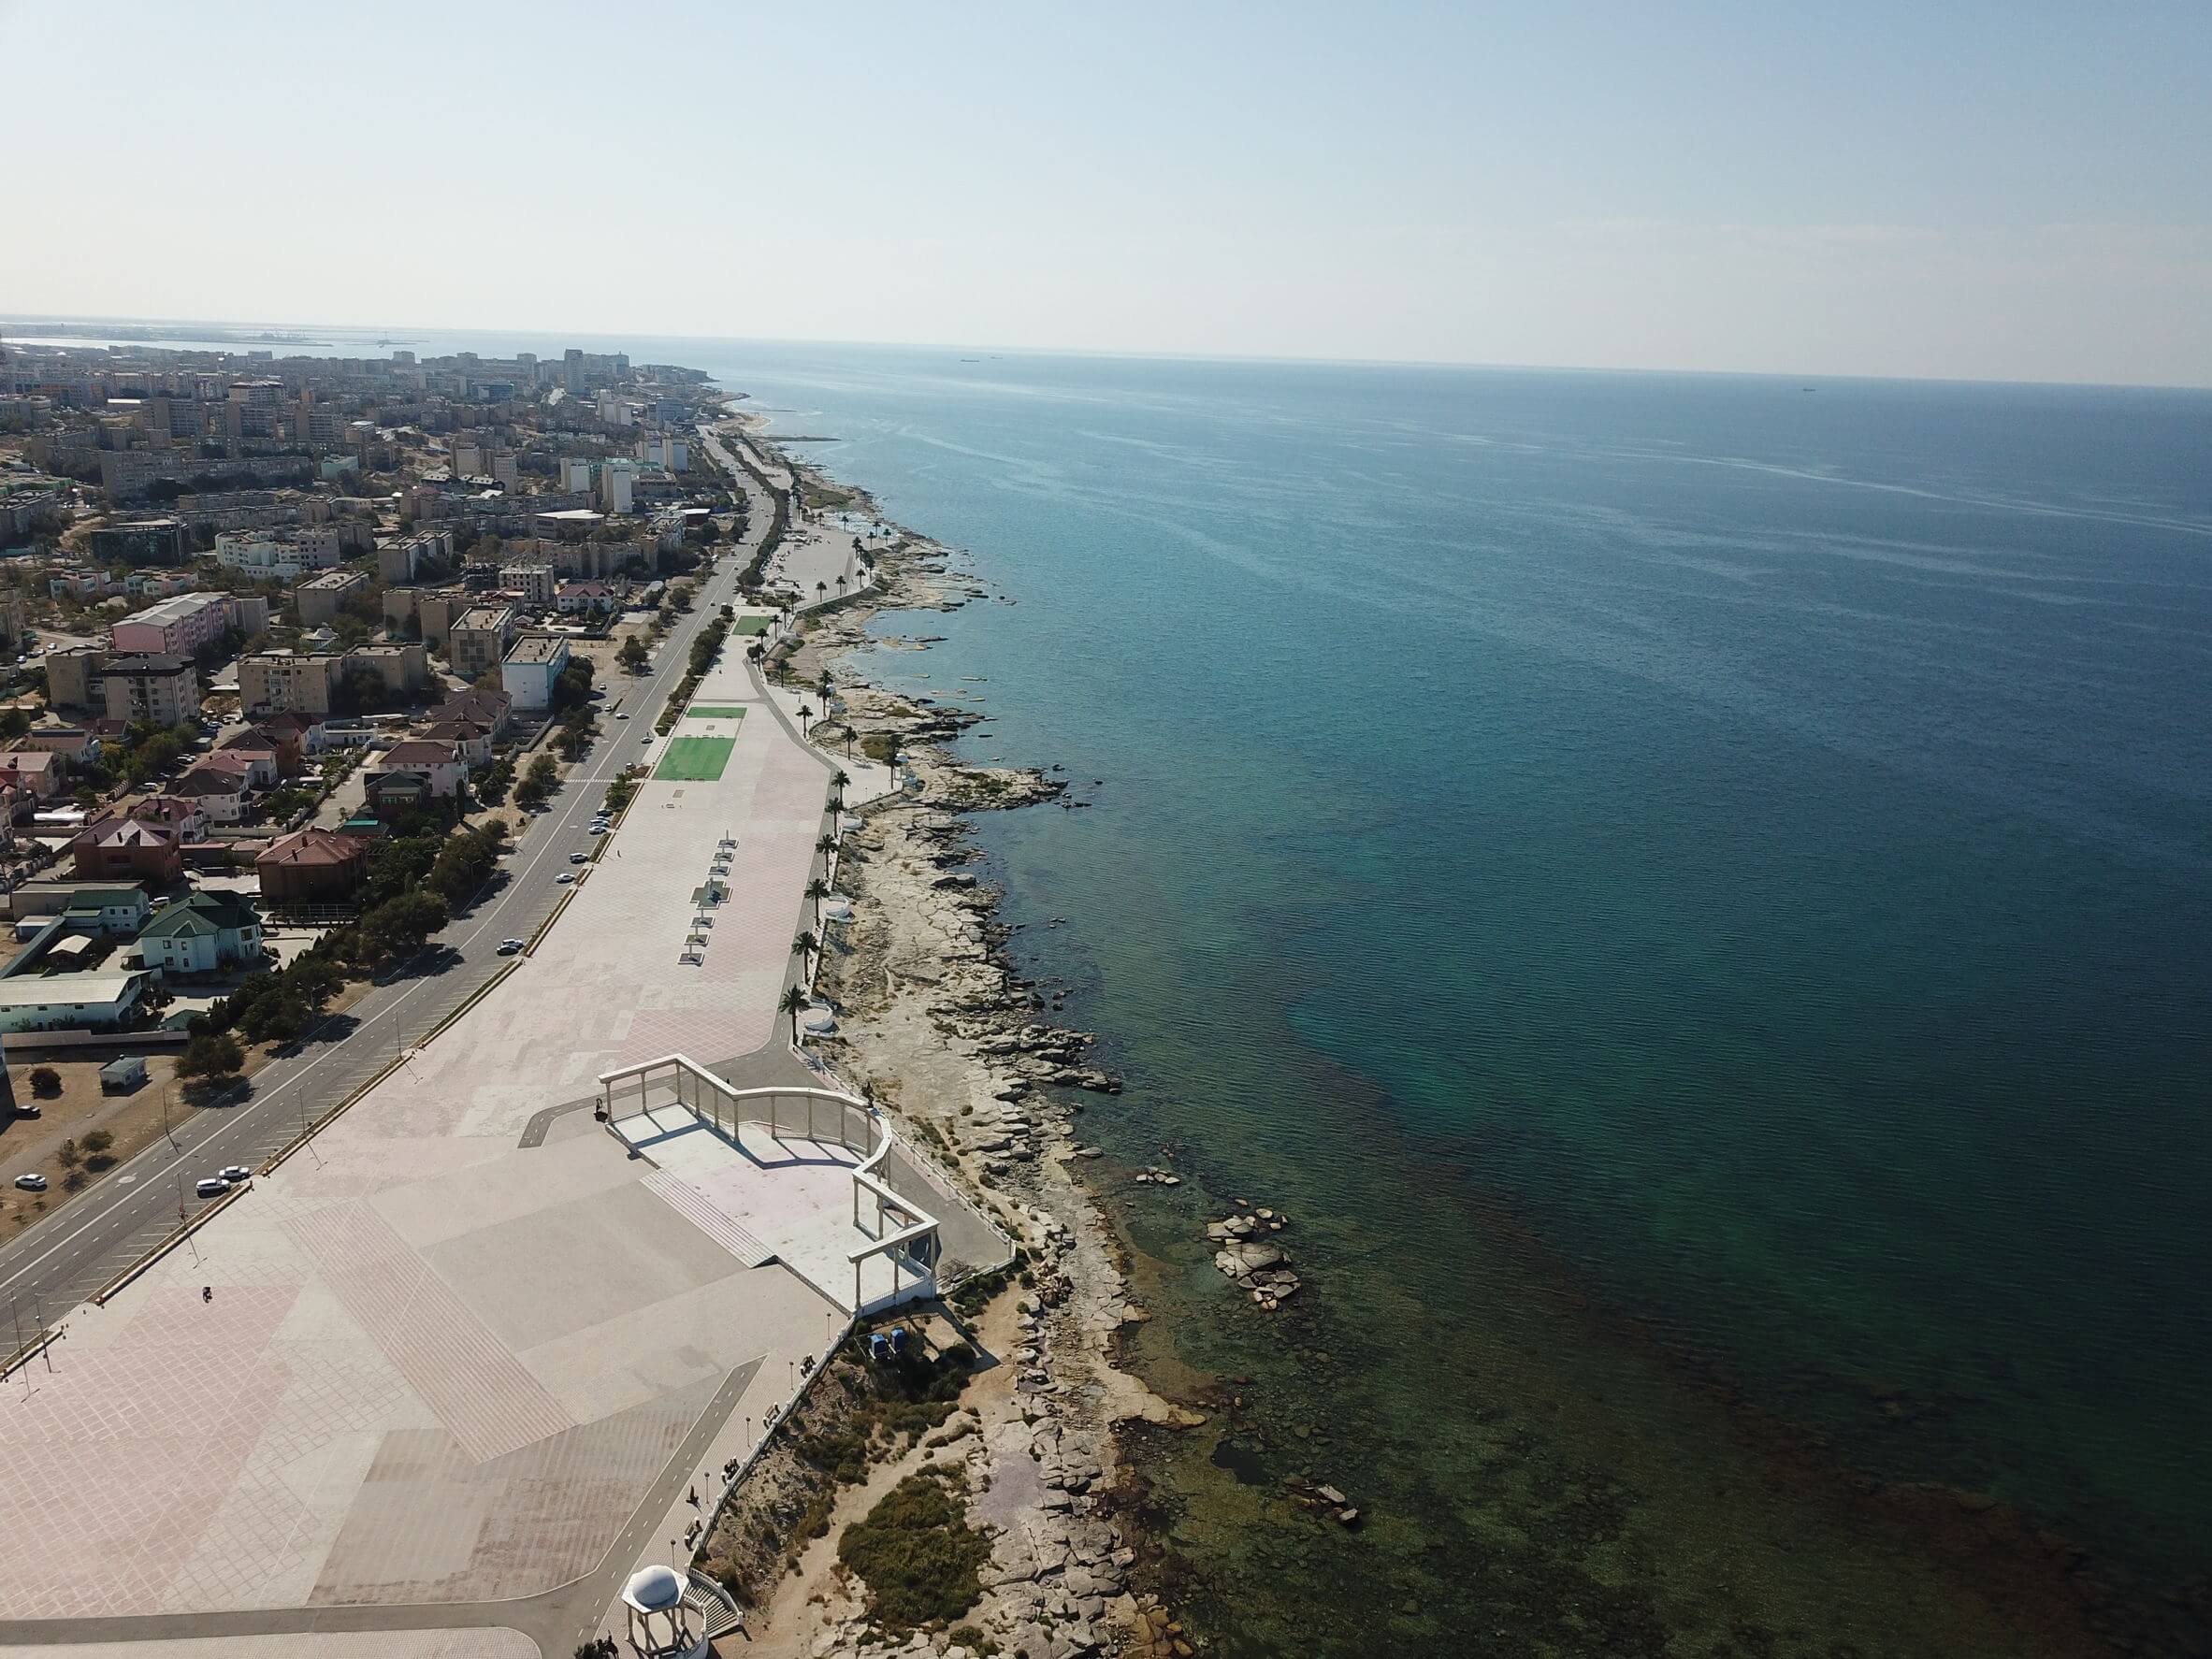 Aerial view of Aktau coast, city, and the Caspian Sea.